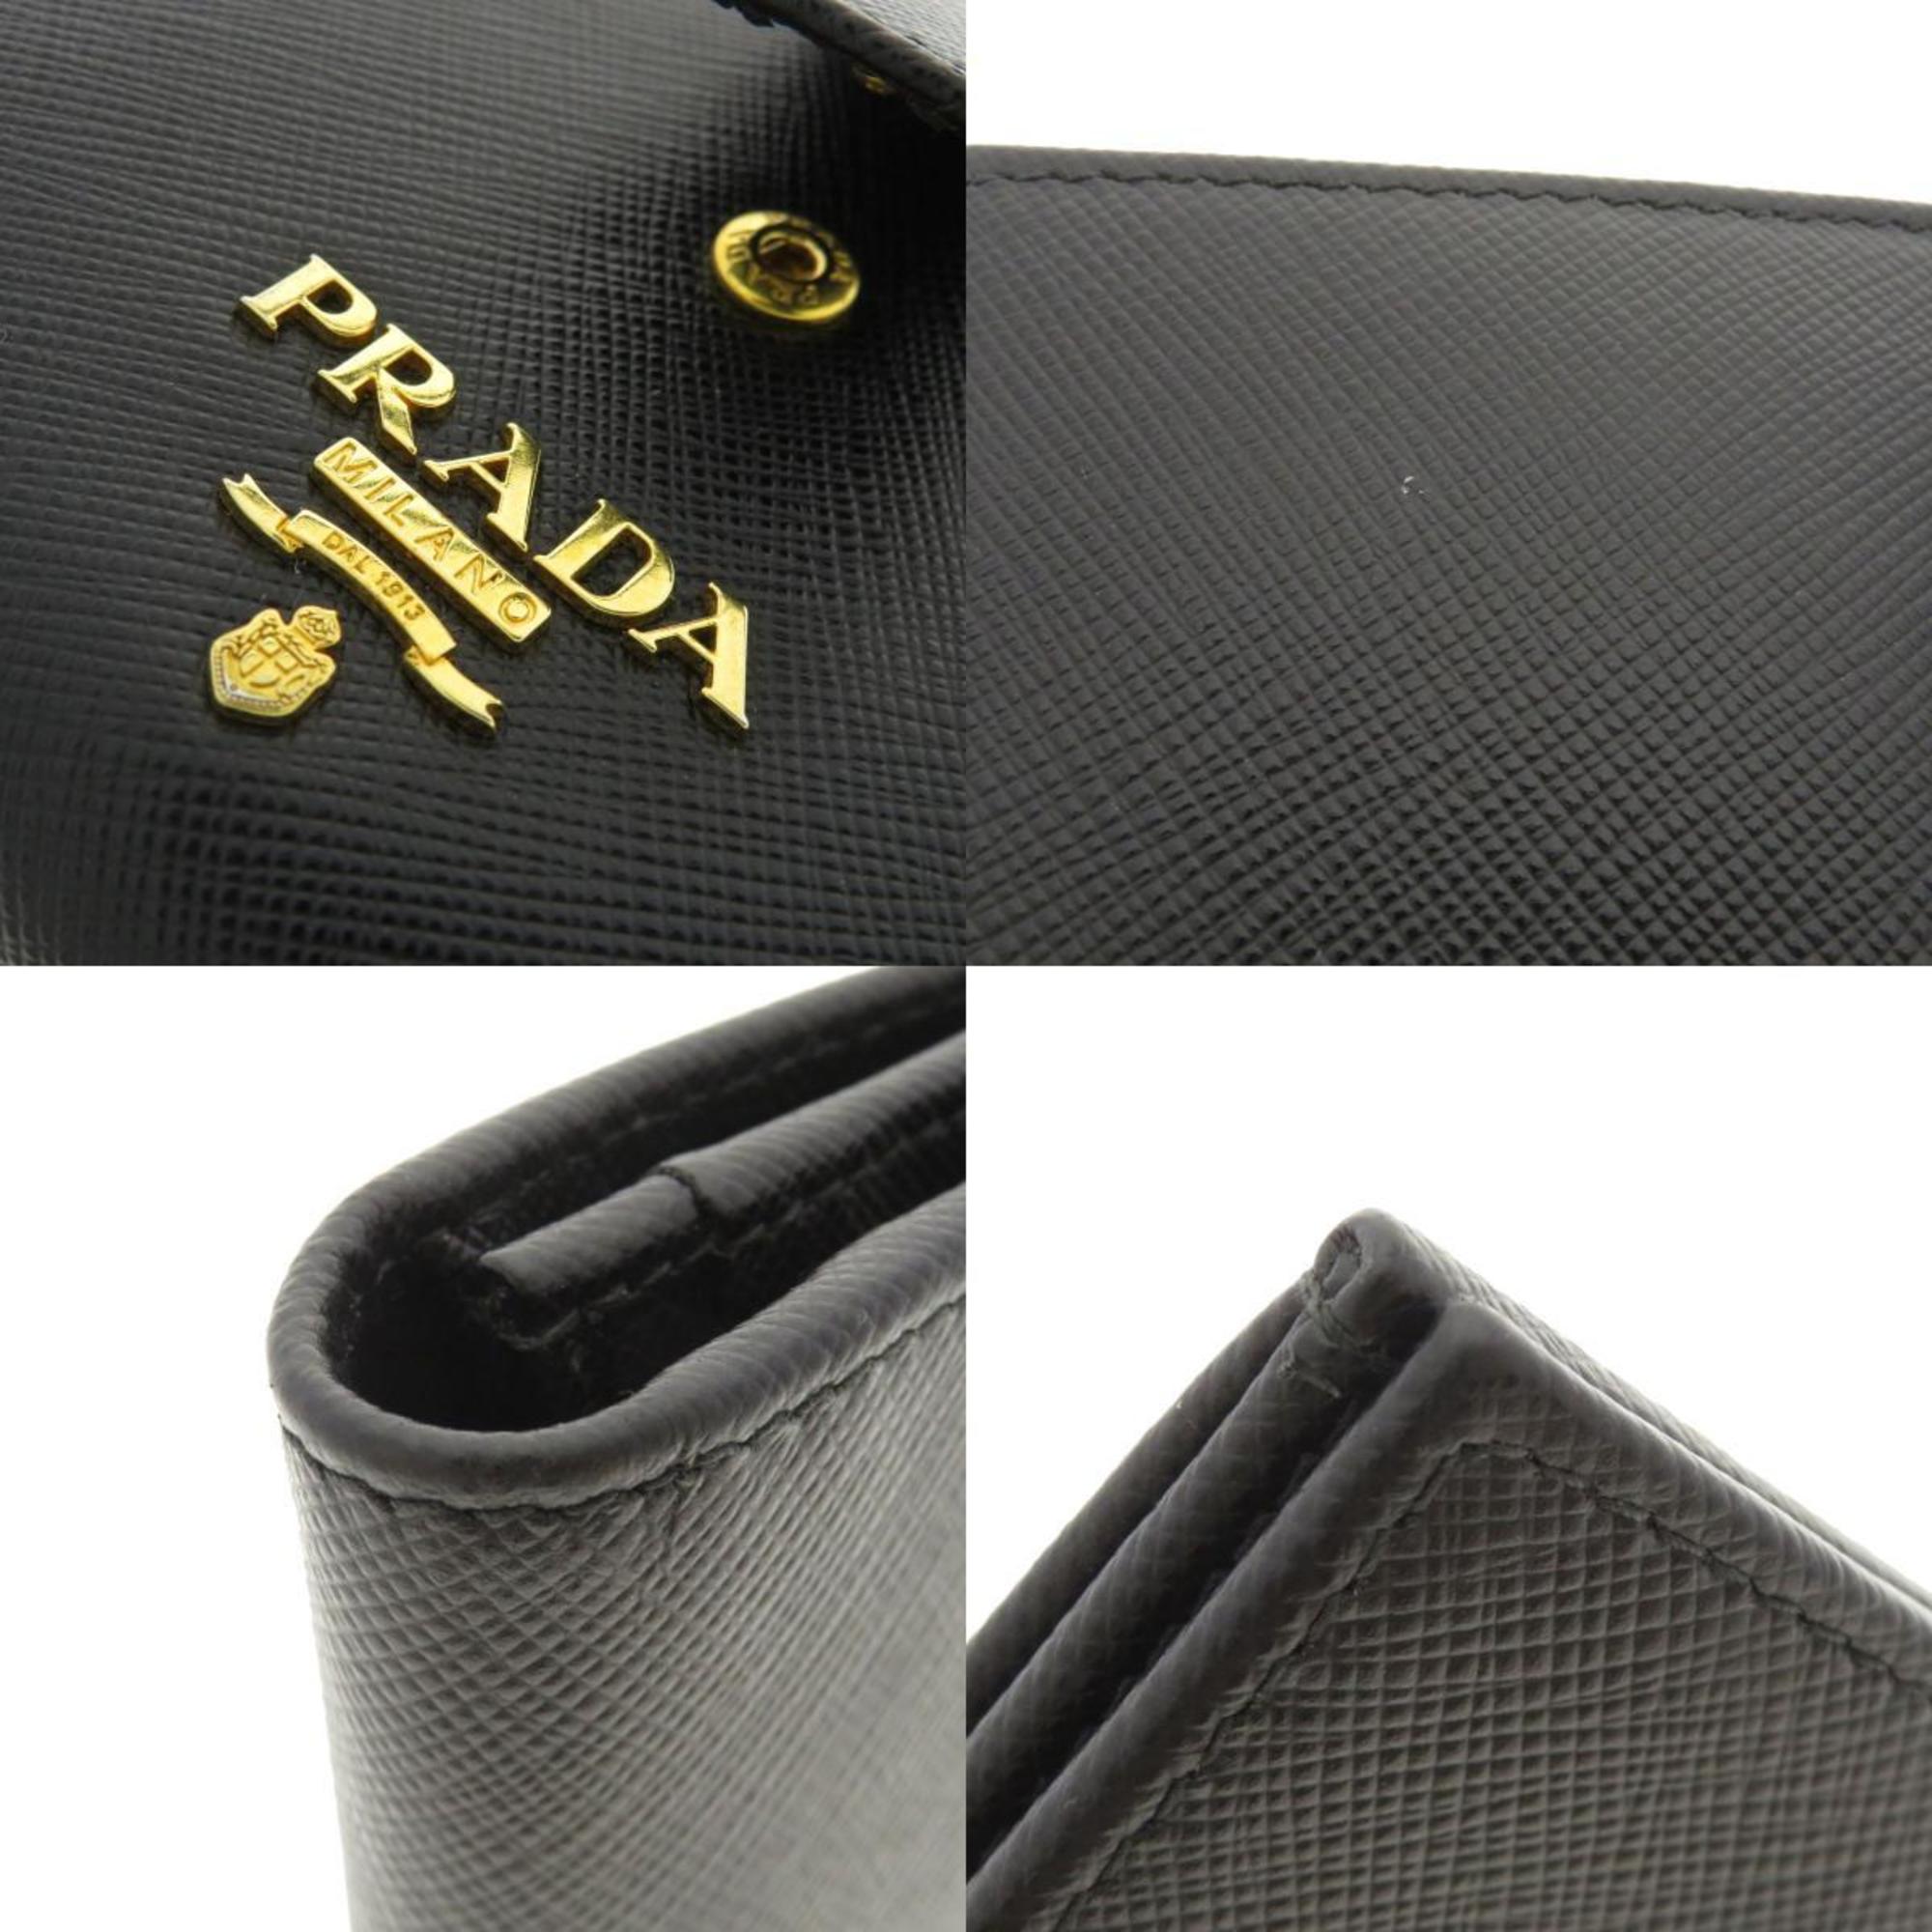 PRADA 1MV025 motif long wallet leather women's